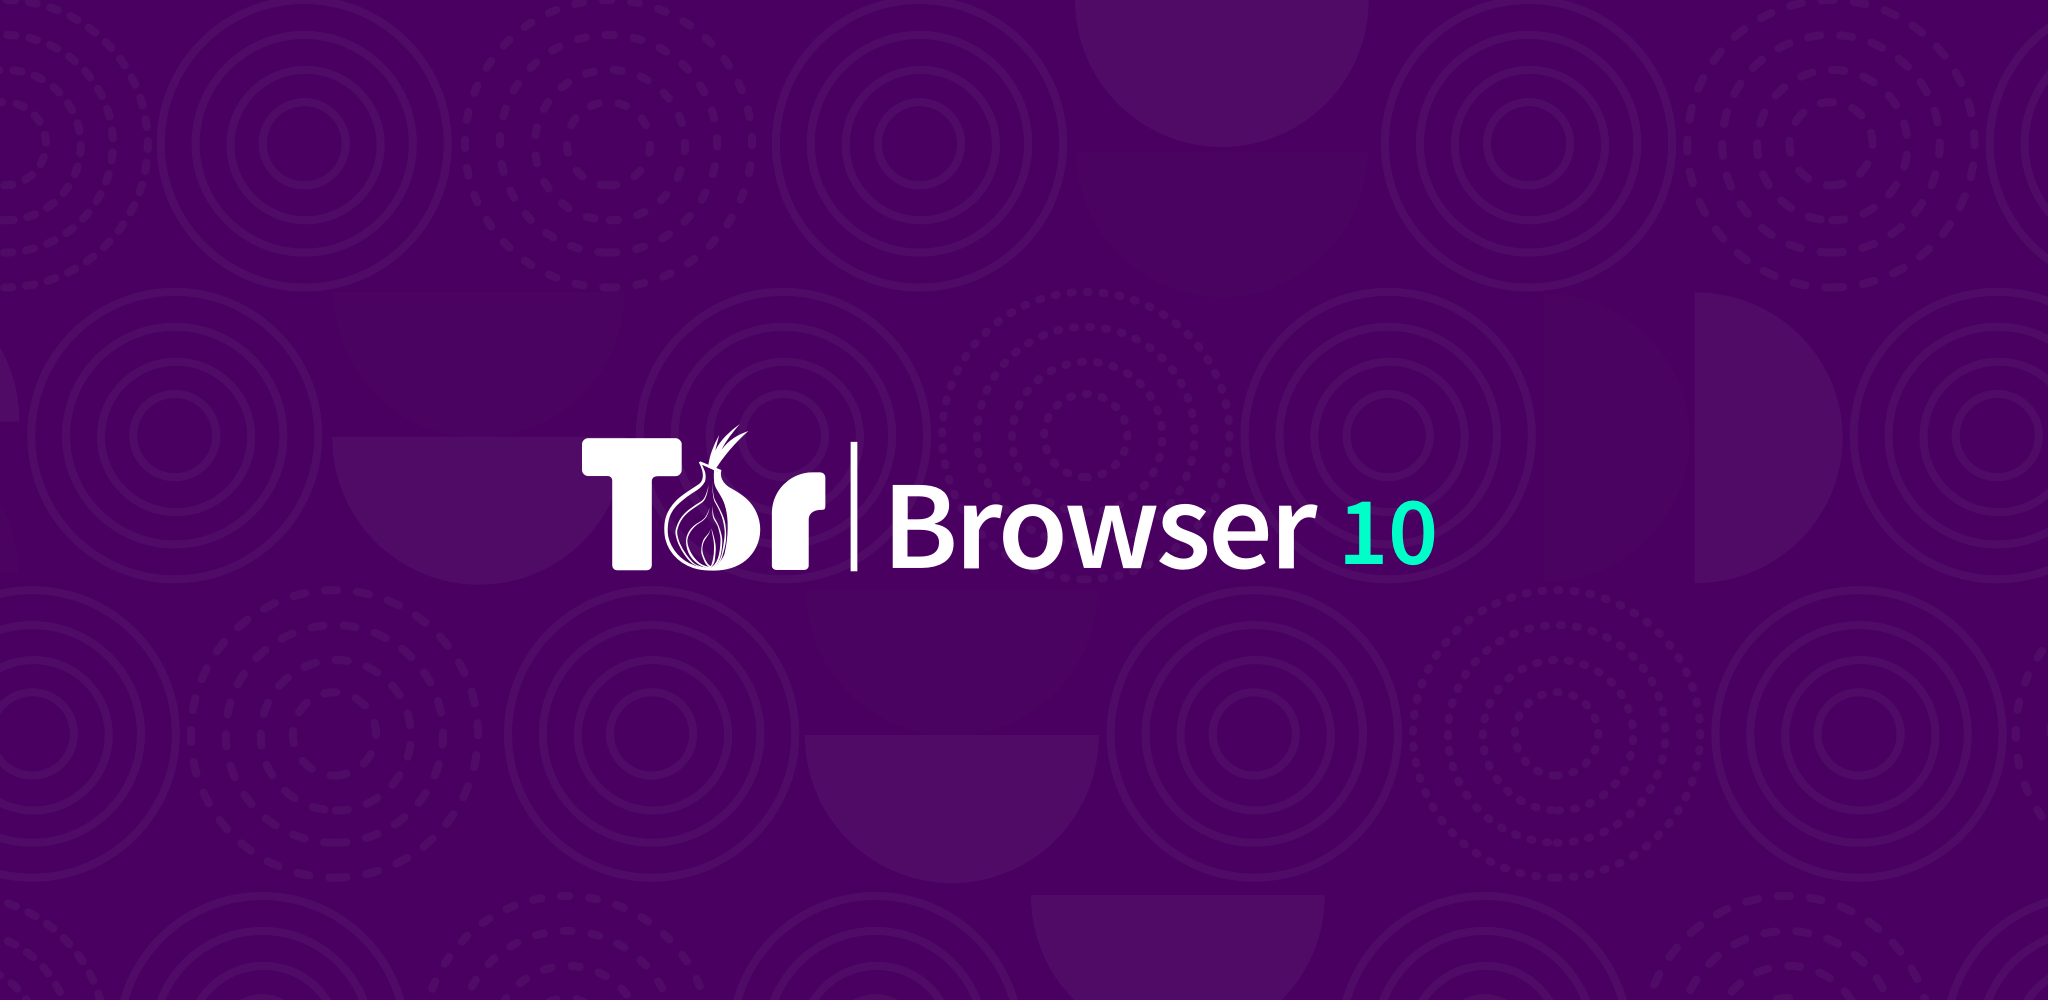 Tor browser for android free hydra тор браузер для андроид скачать торрент hydra2web